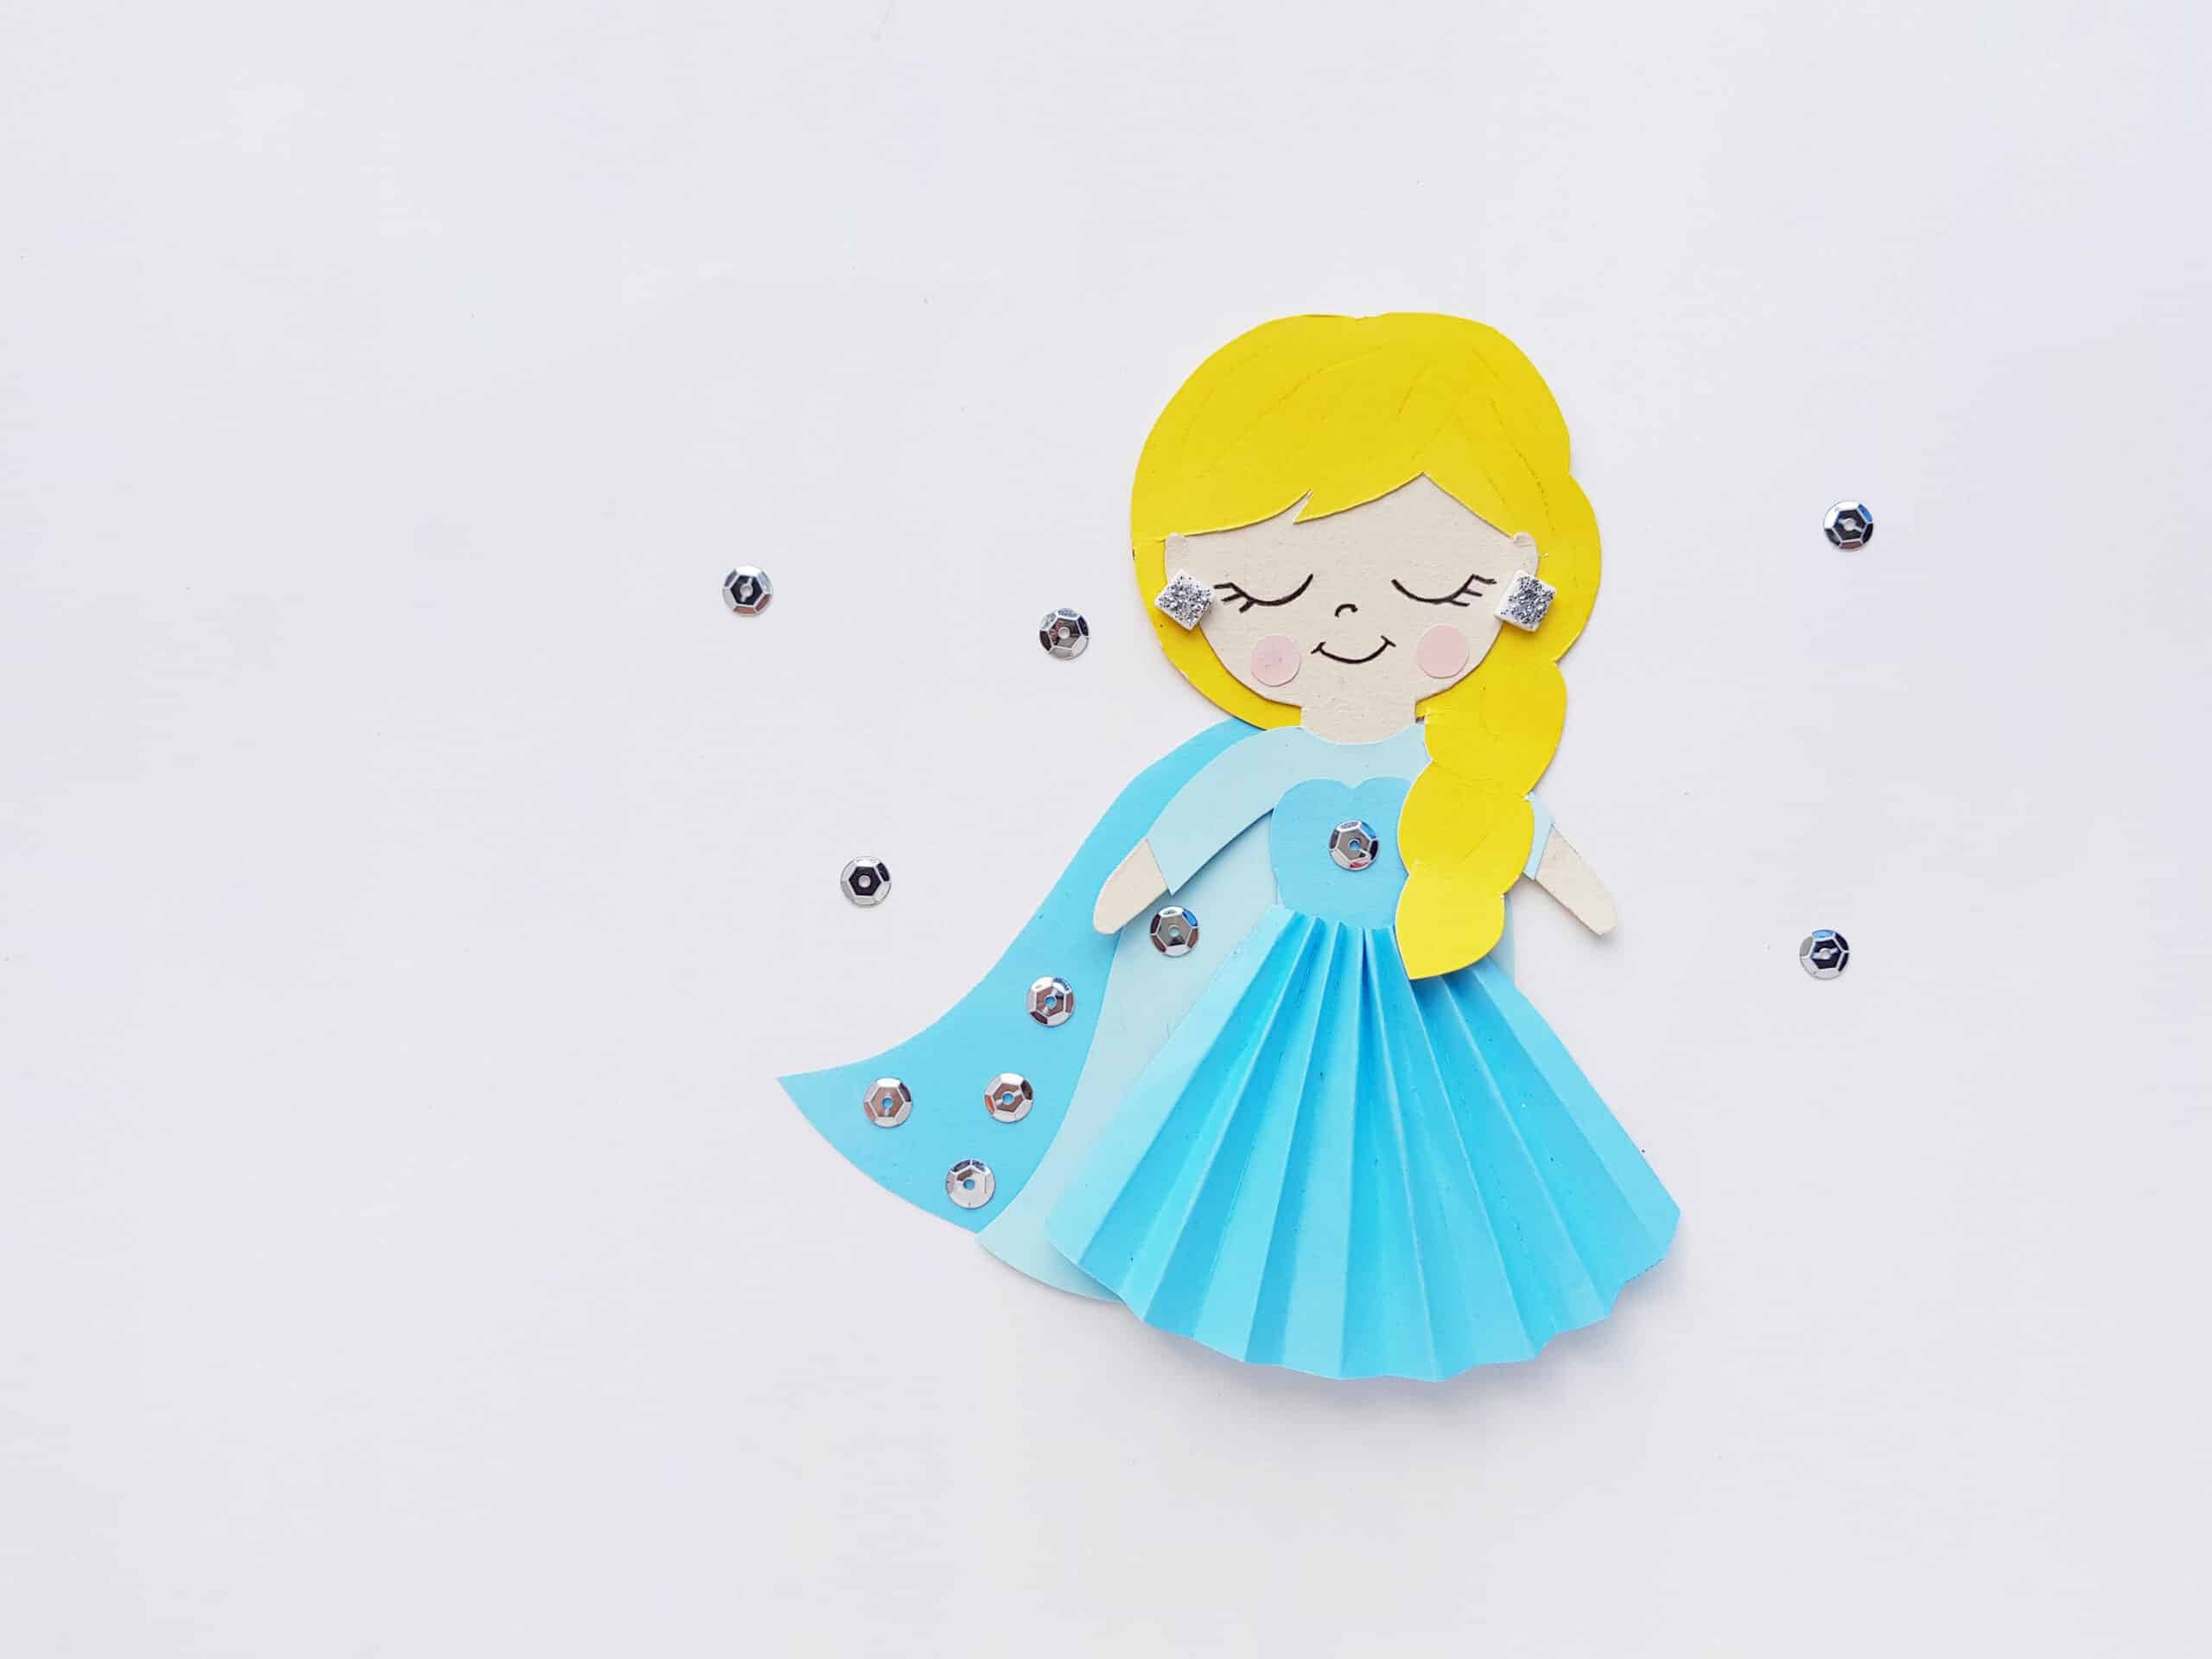 Elsa-Inspired Papercraft Doll Tutorial